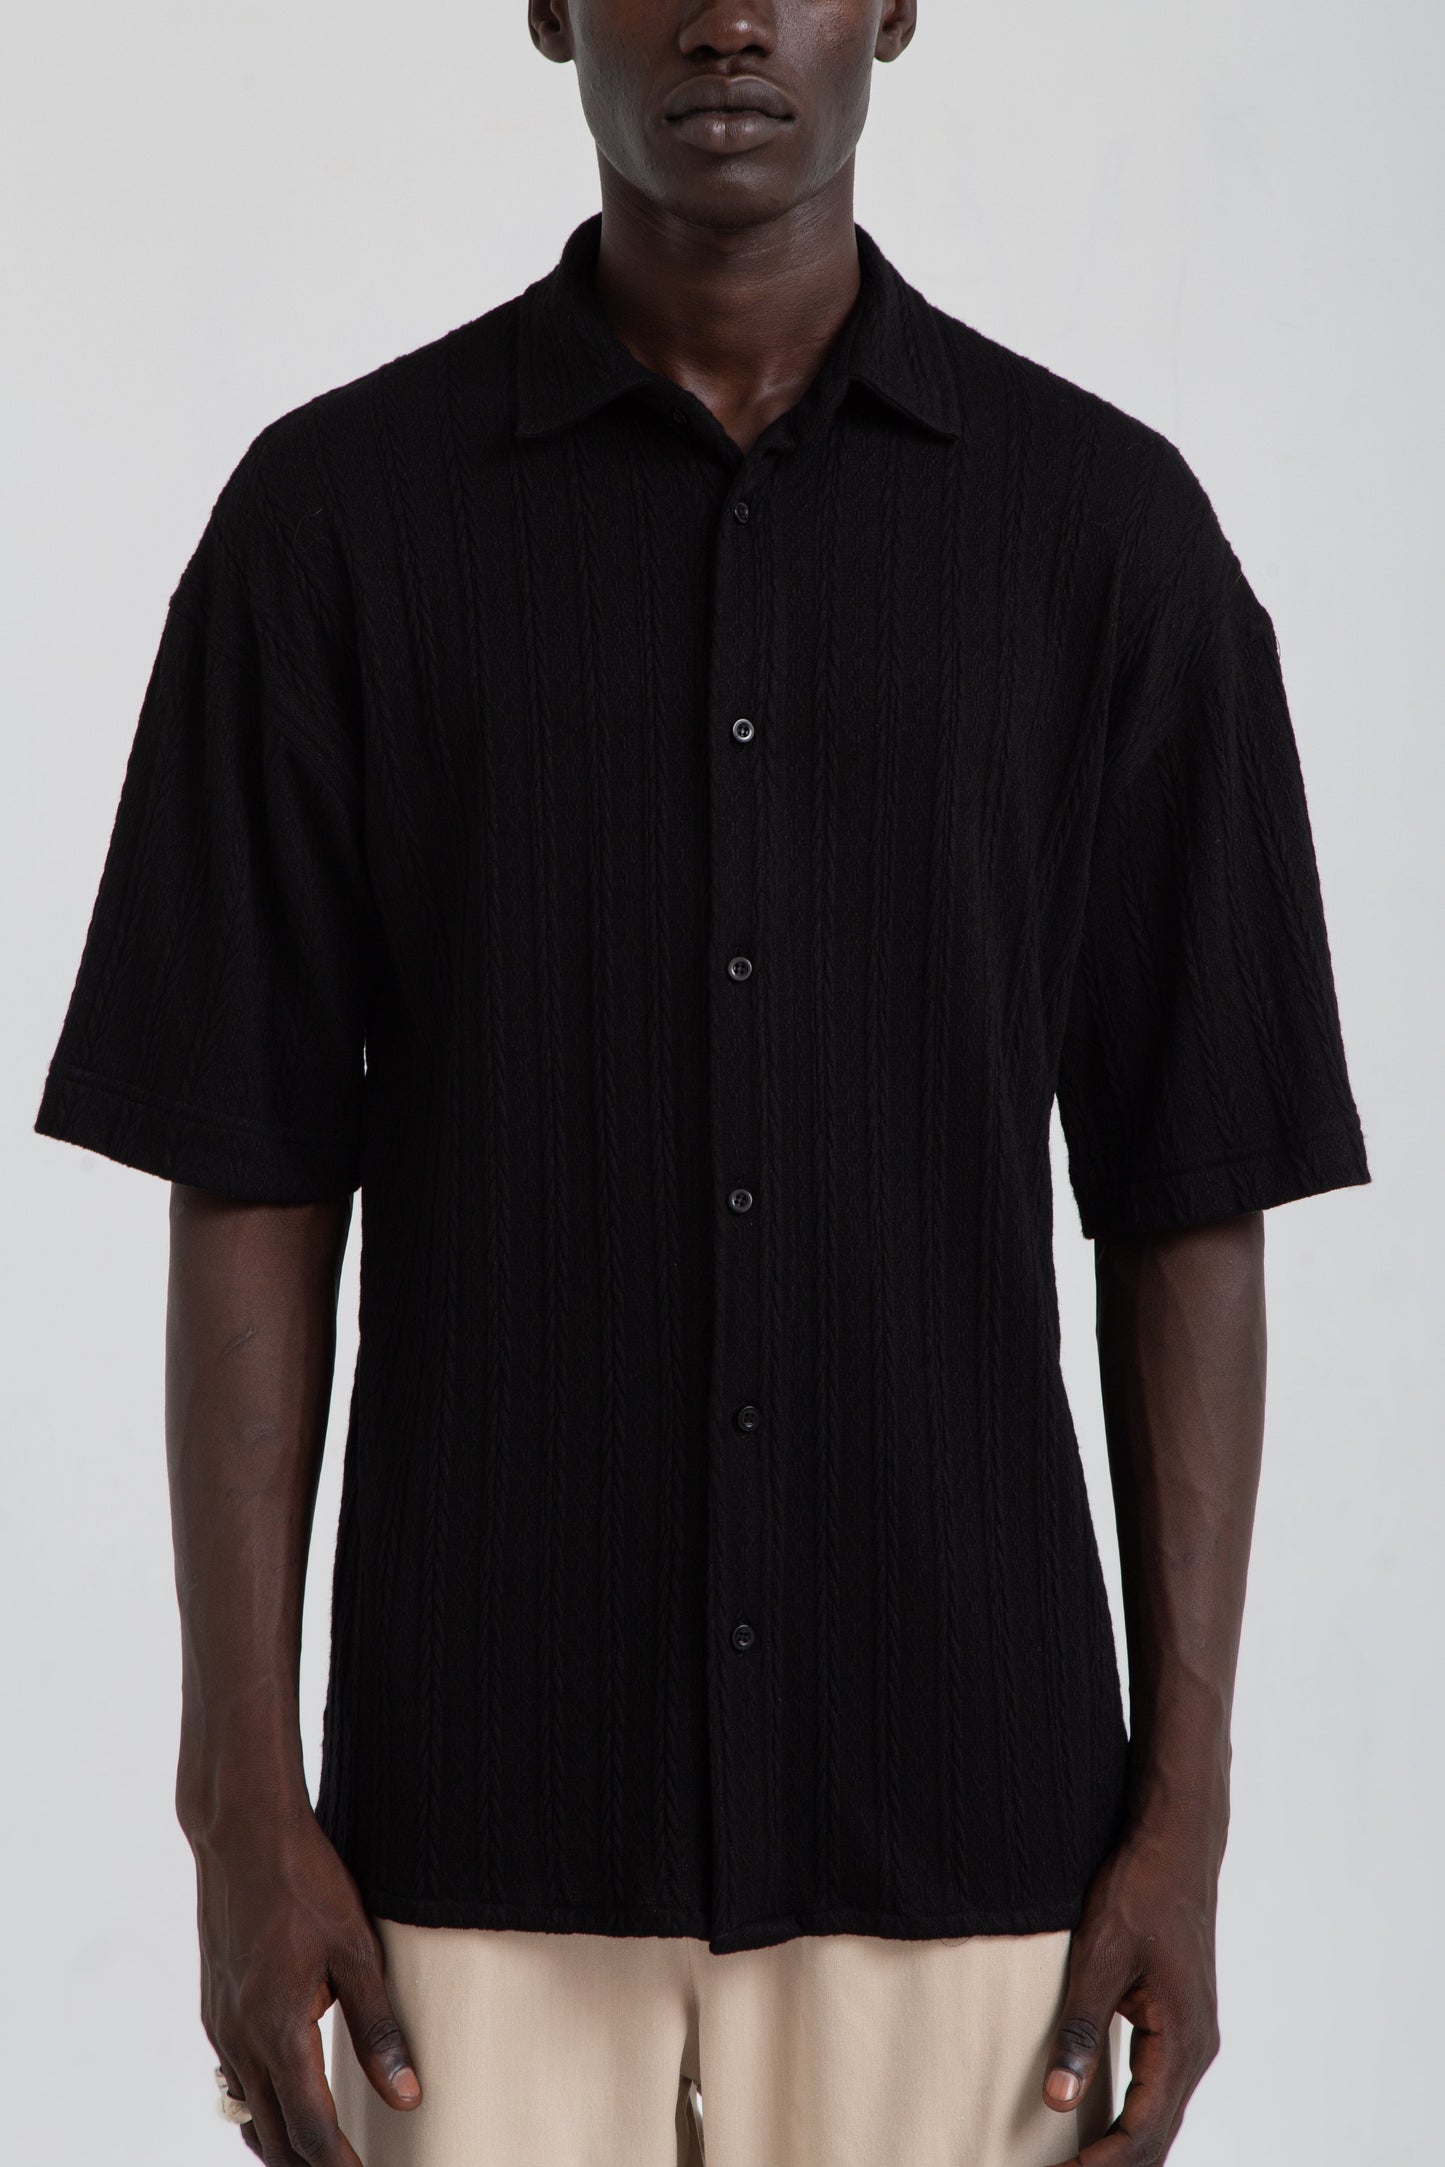 Black Knit Shirt - oddegypt